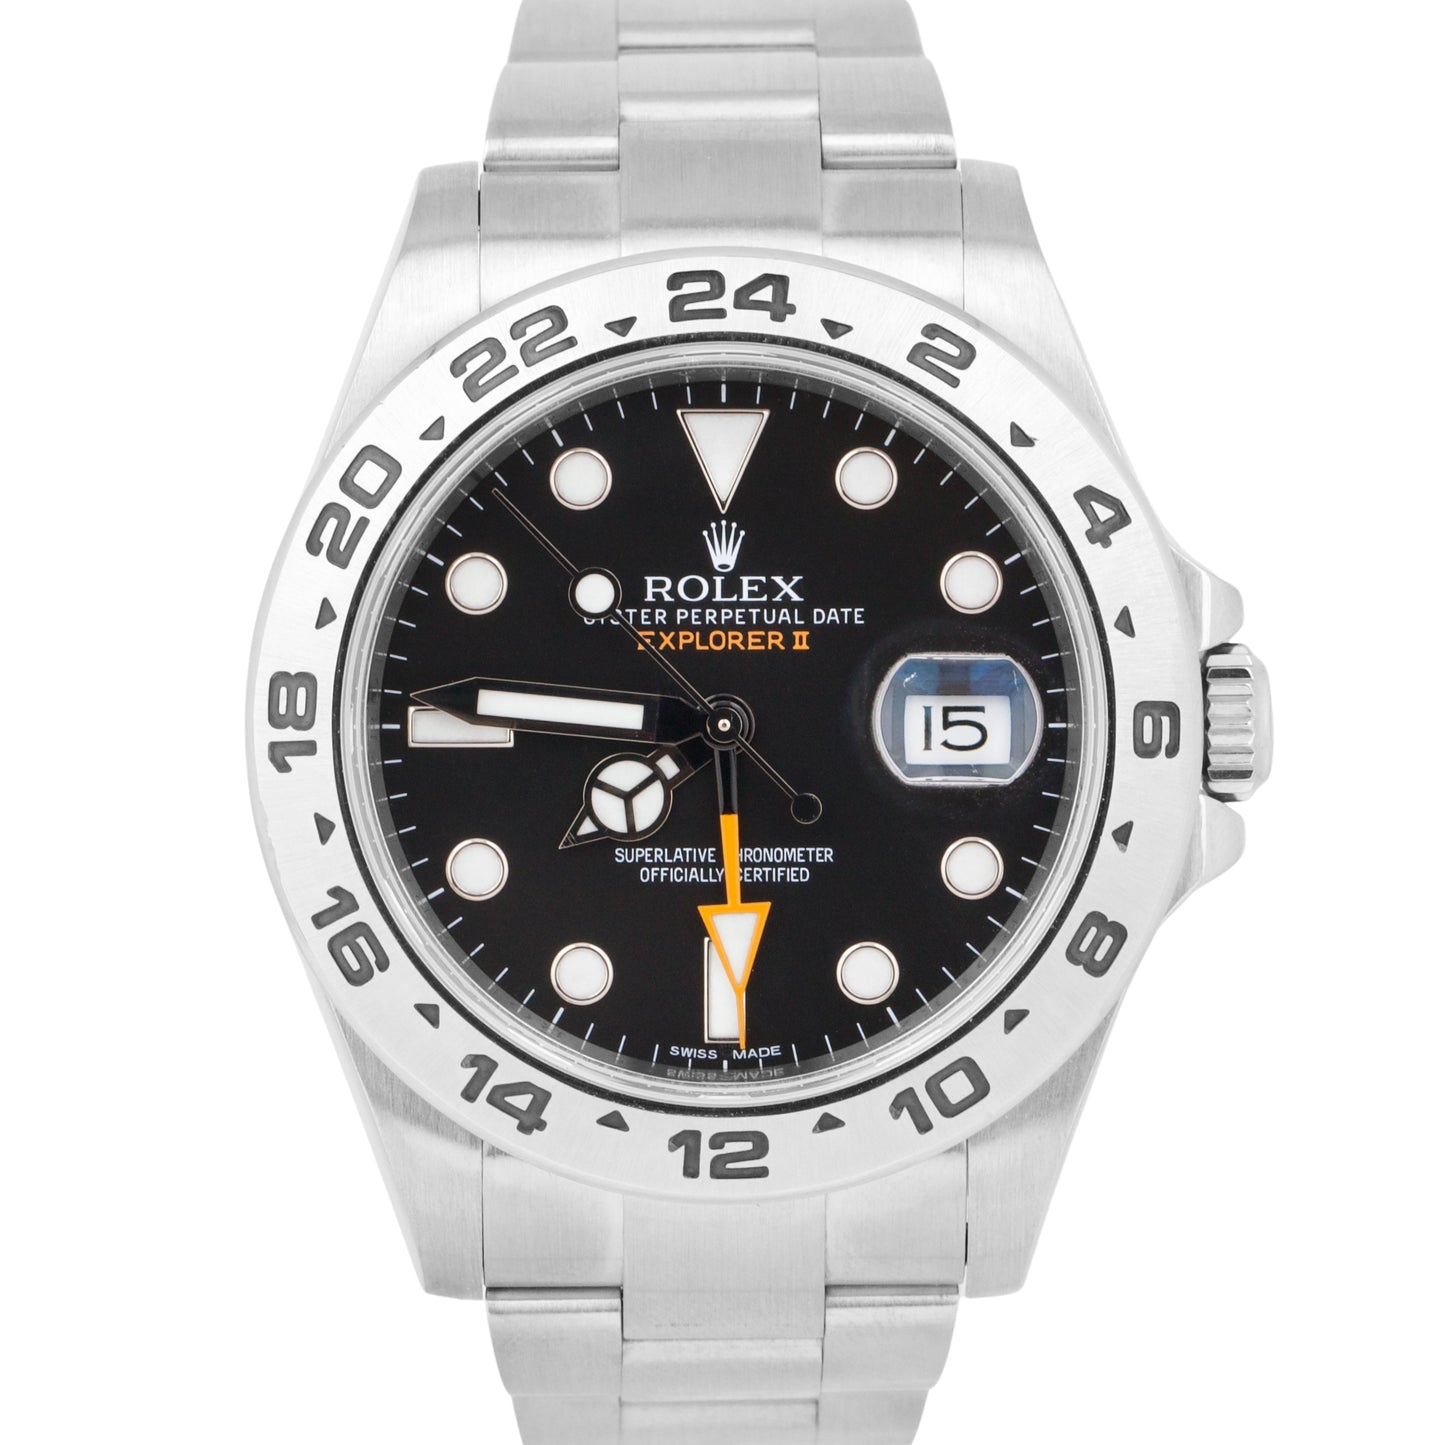 Rolex Explorer II Black Orange Stainless Steel GMT Date 42mm Oyster Watch 216570